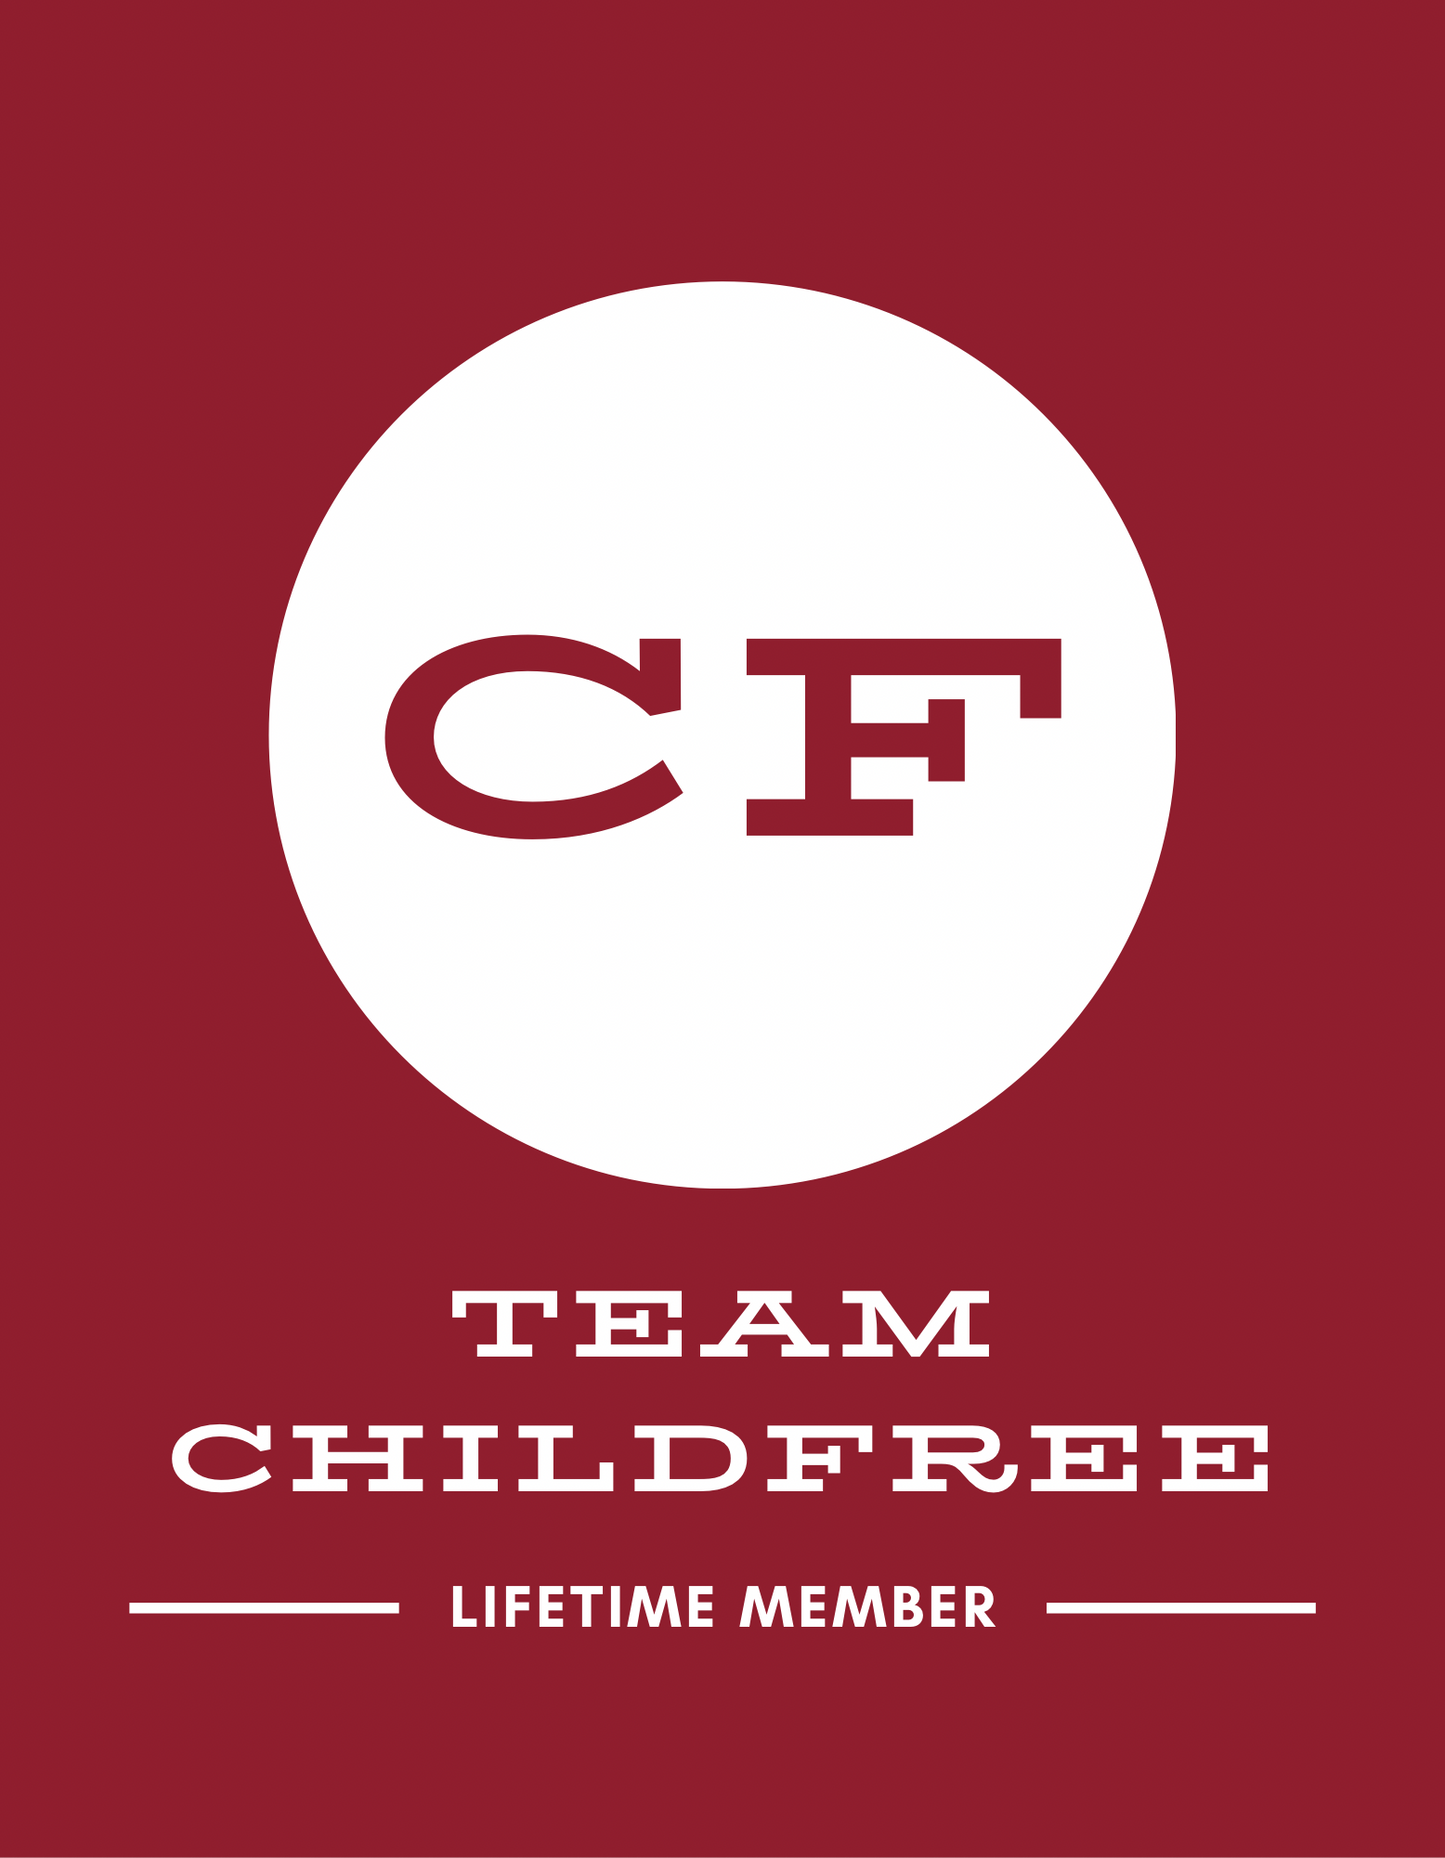 CF - ChildFree